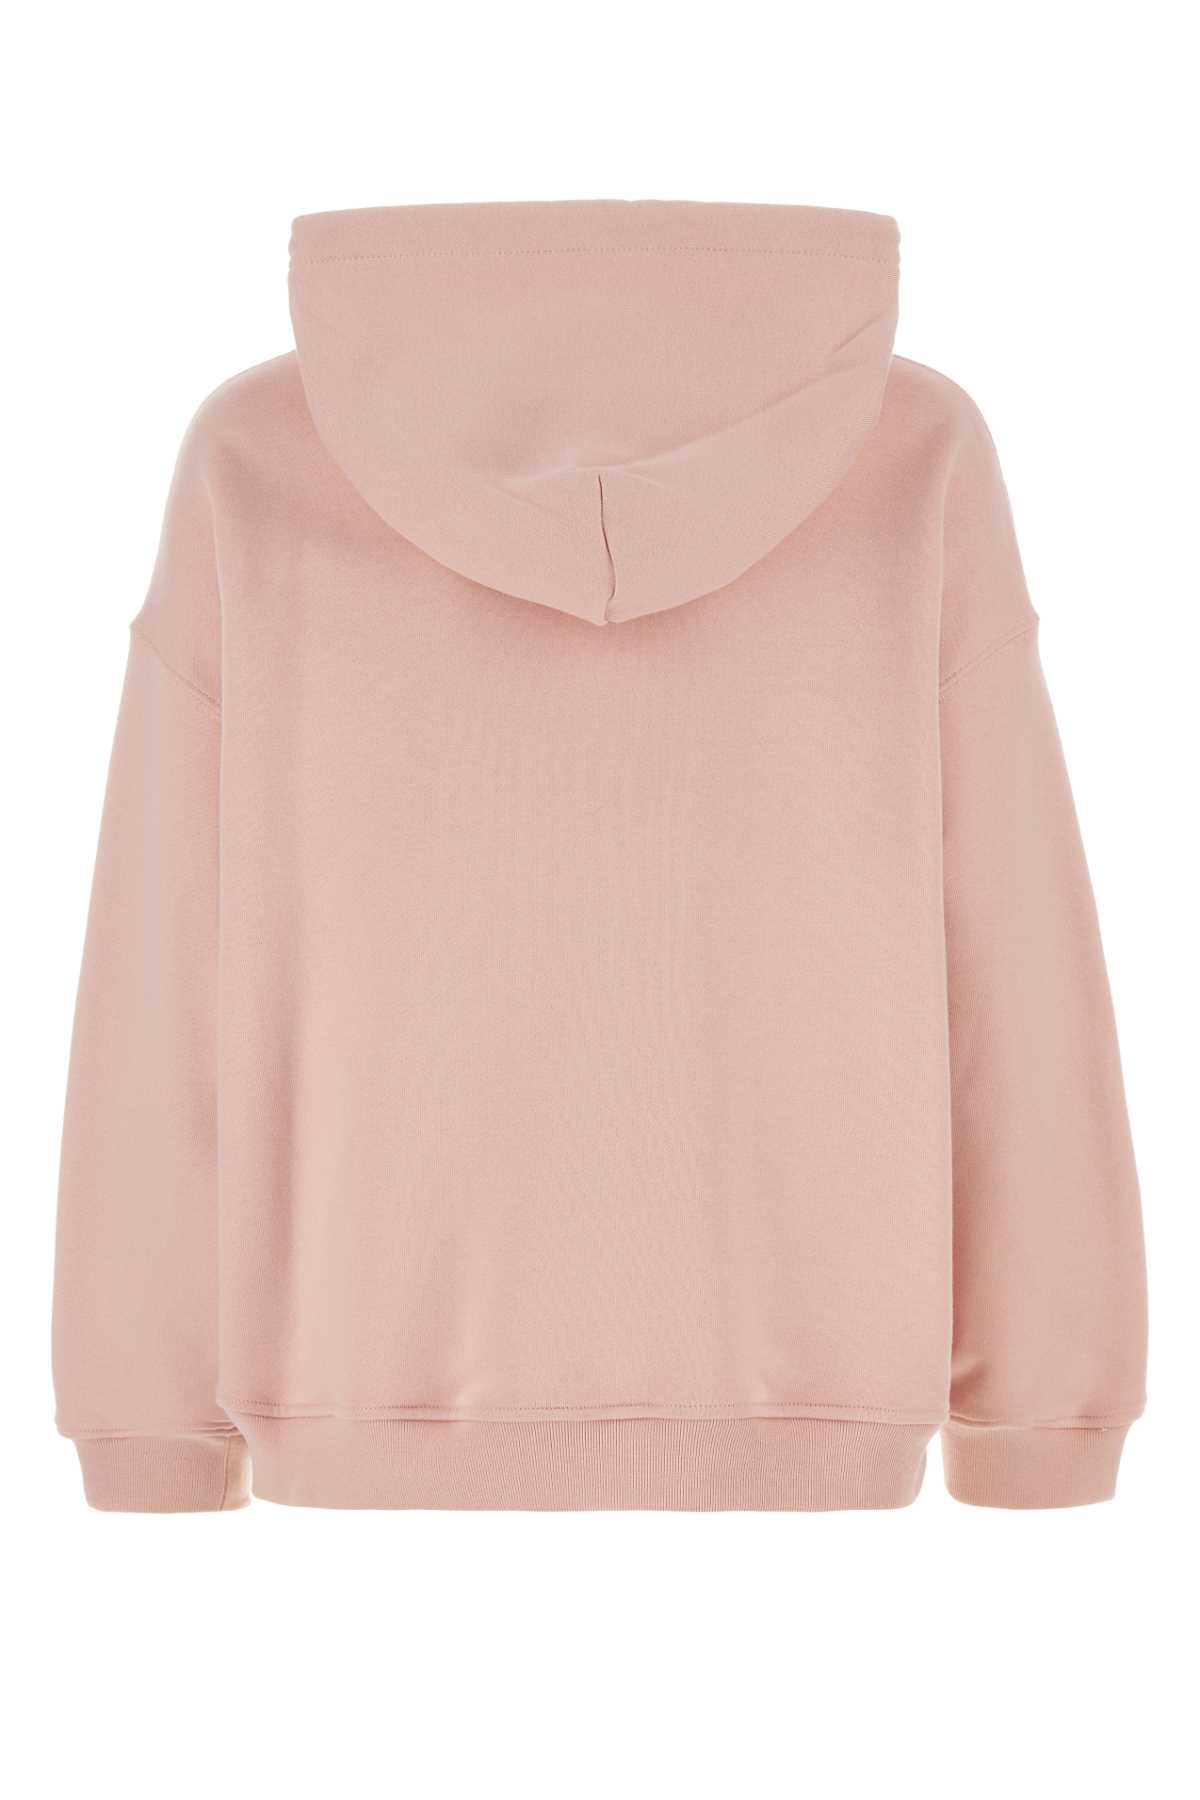 Versace Pink Cotton Oversize Sweatshirt In Pinkwhite